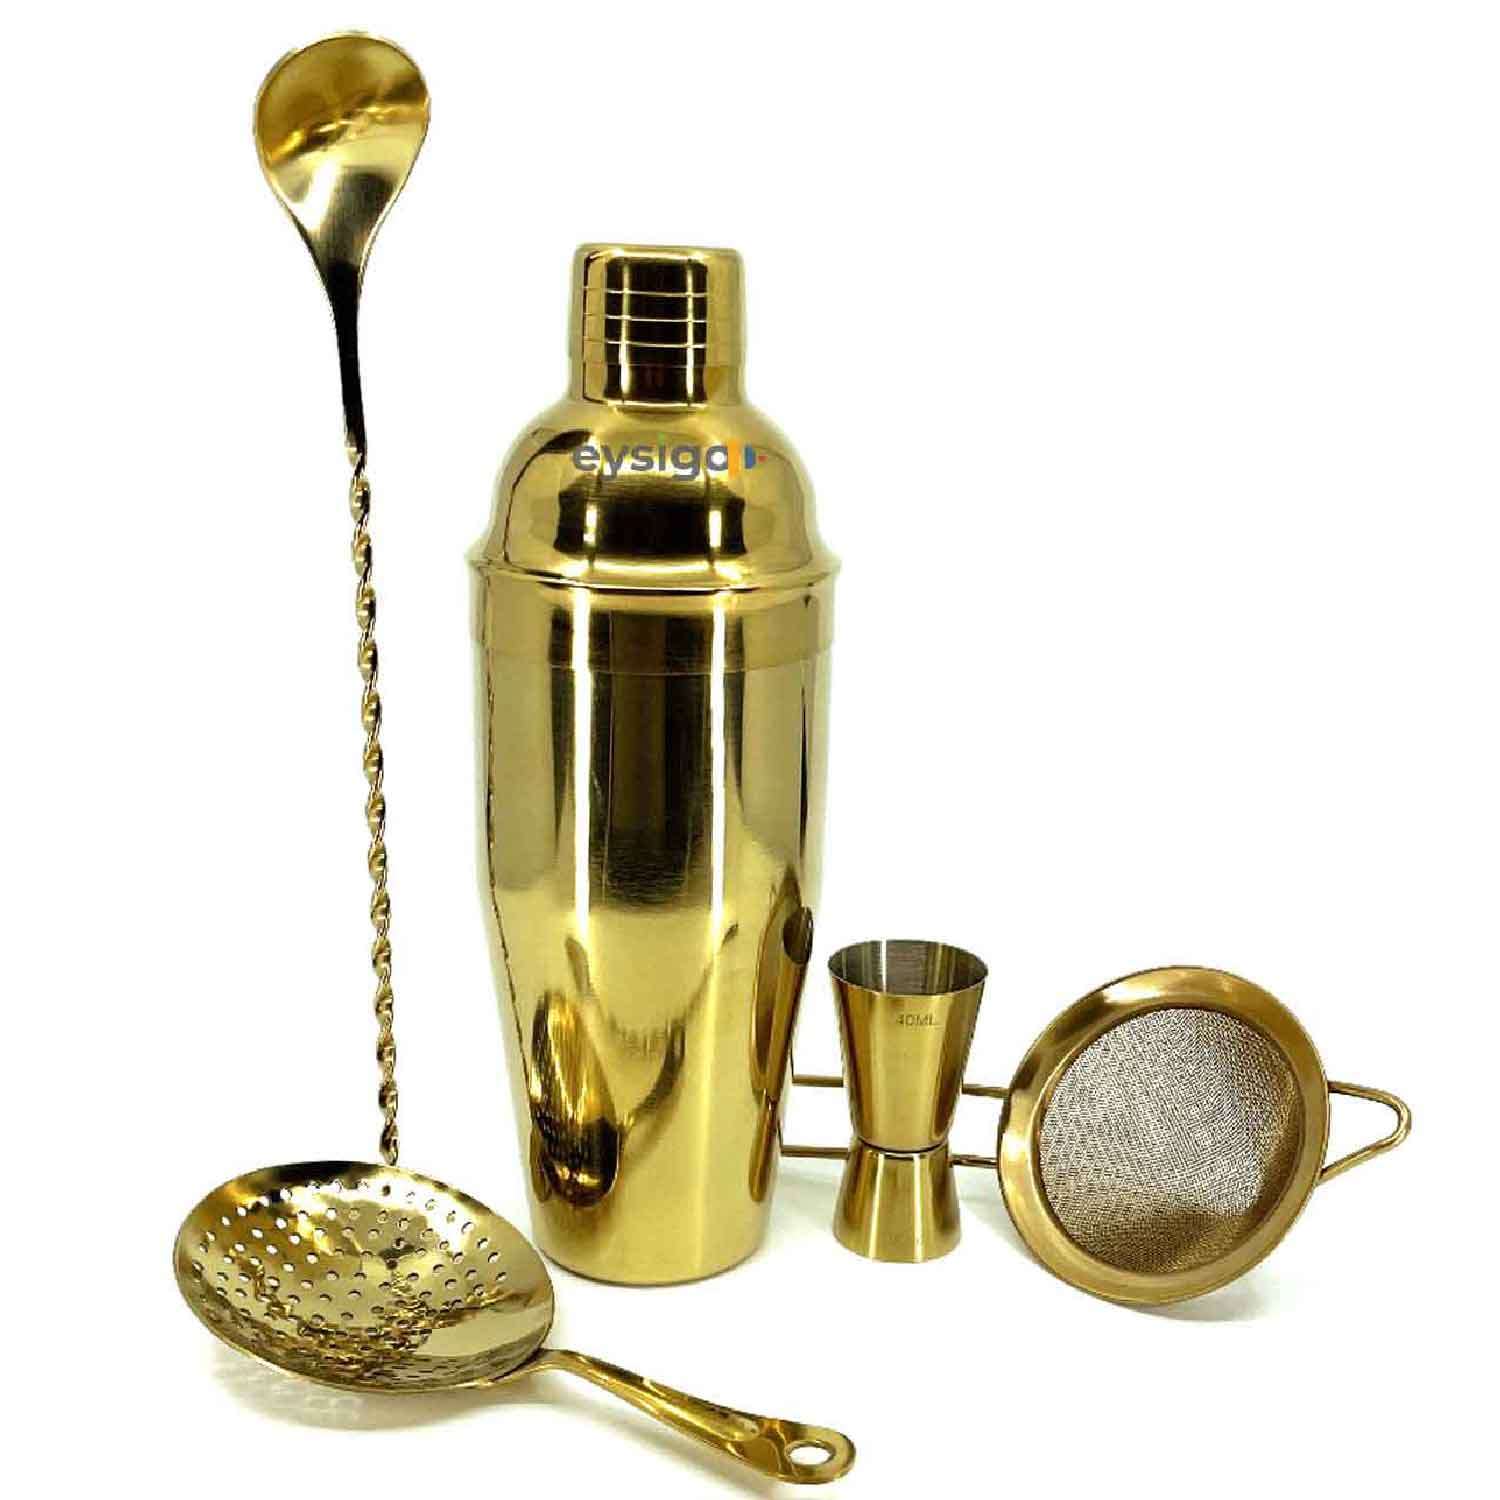 Eysigo Kokteyl Shaker Seti, Gold, 700 ml, 5 Parça | iles.com.tr